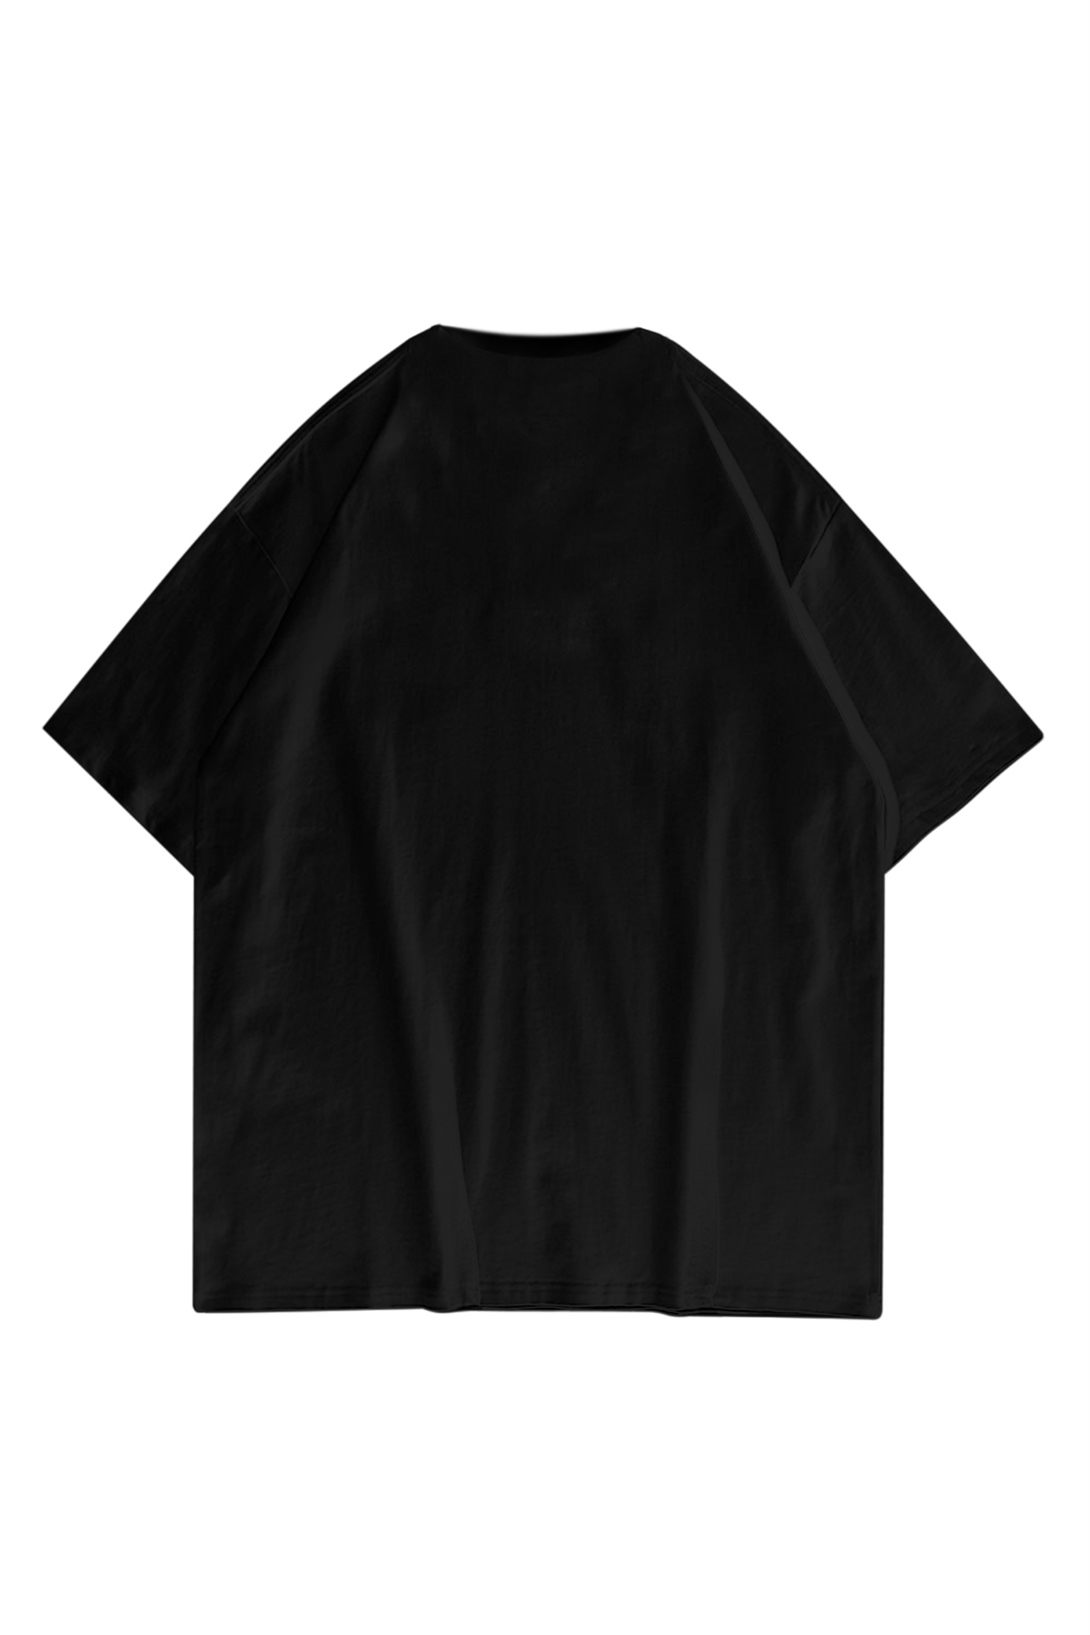 Trendiz Unisex Higher World Siyah Tshirt